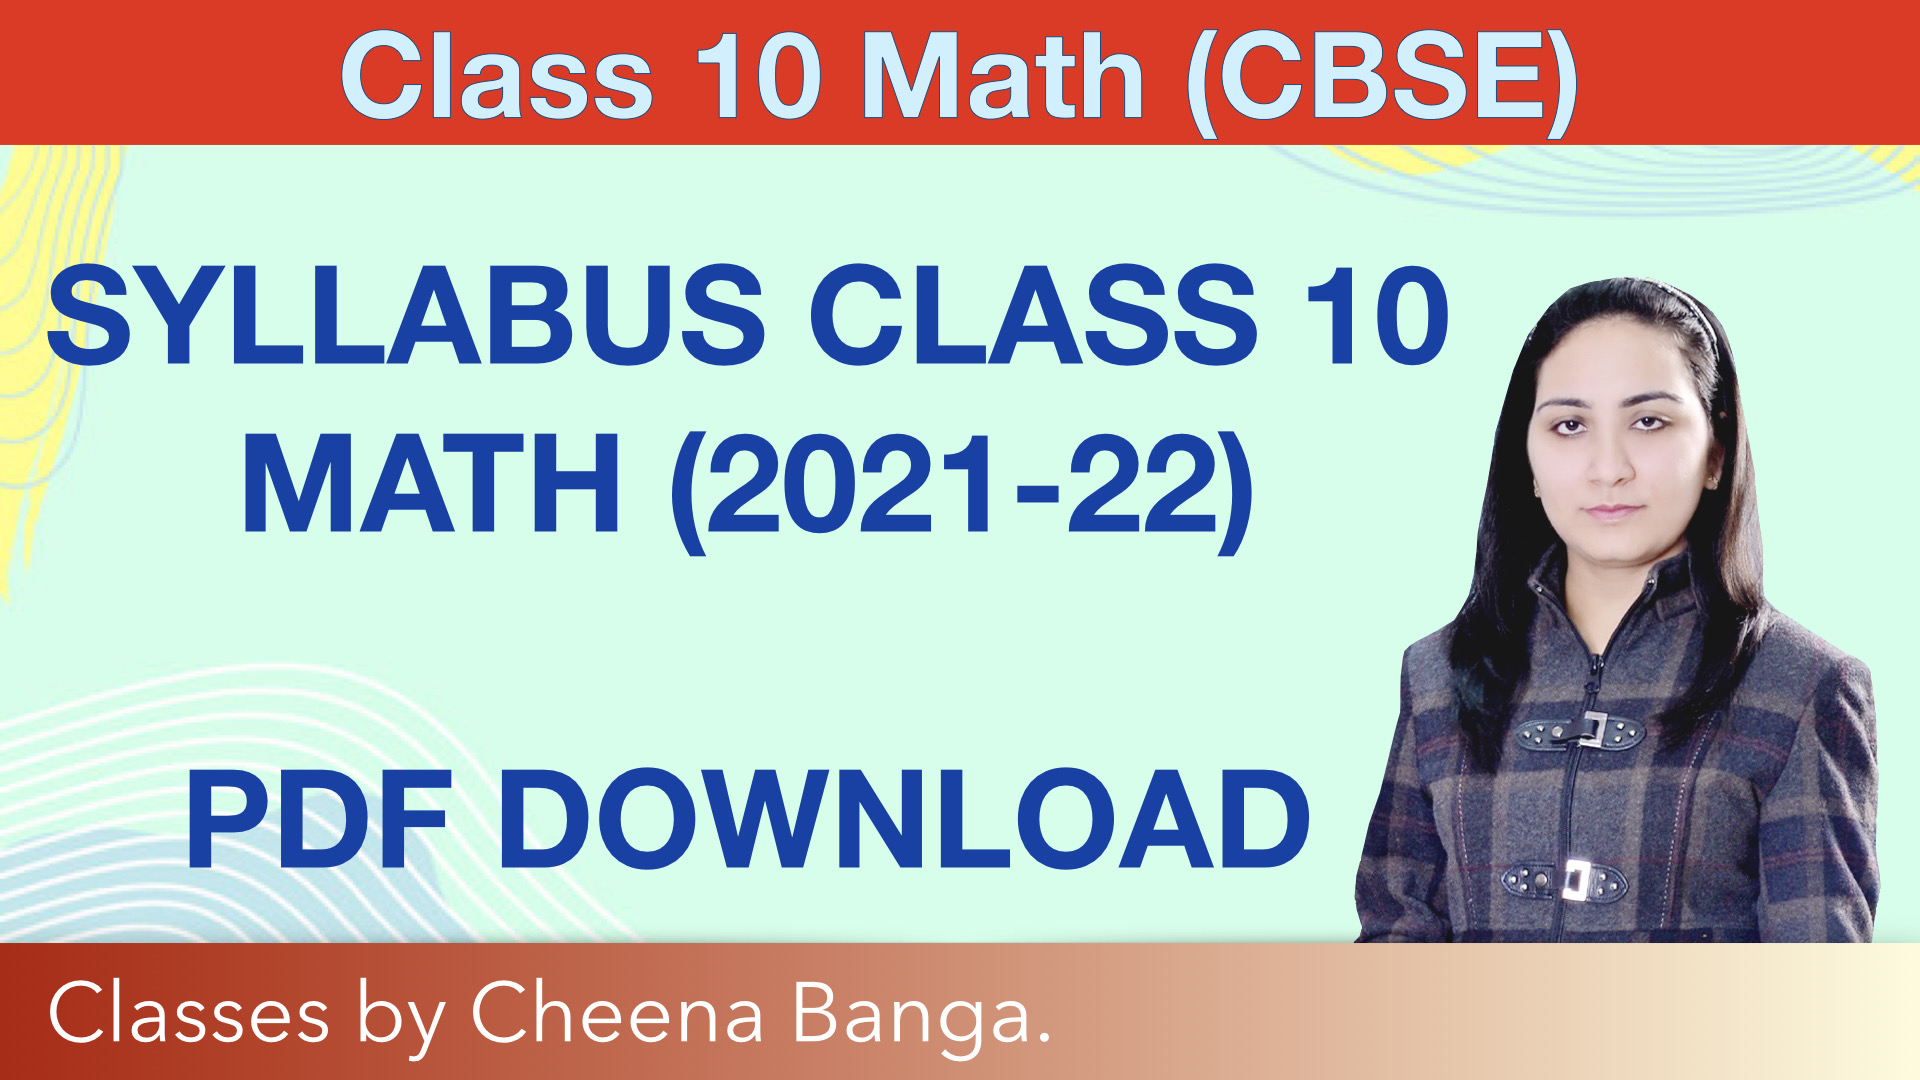 Class 10 math | CBSE | Syllabus | 2021-22 | pdf